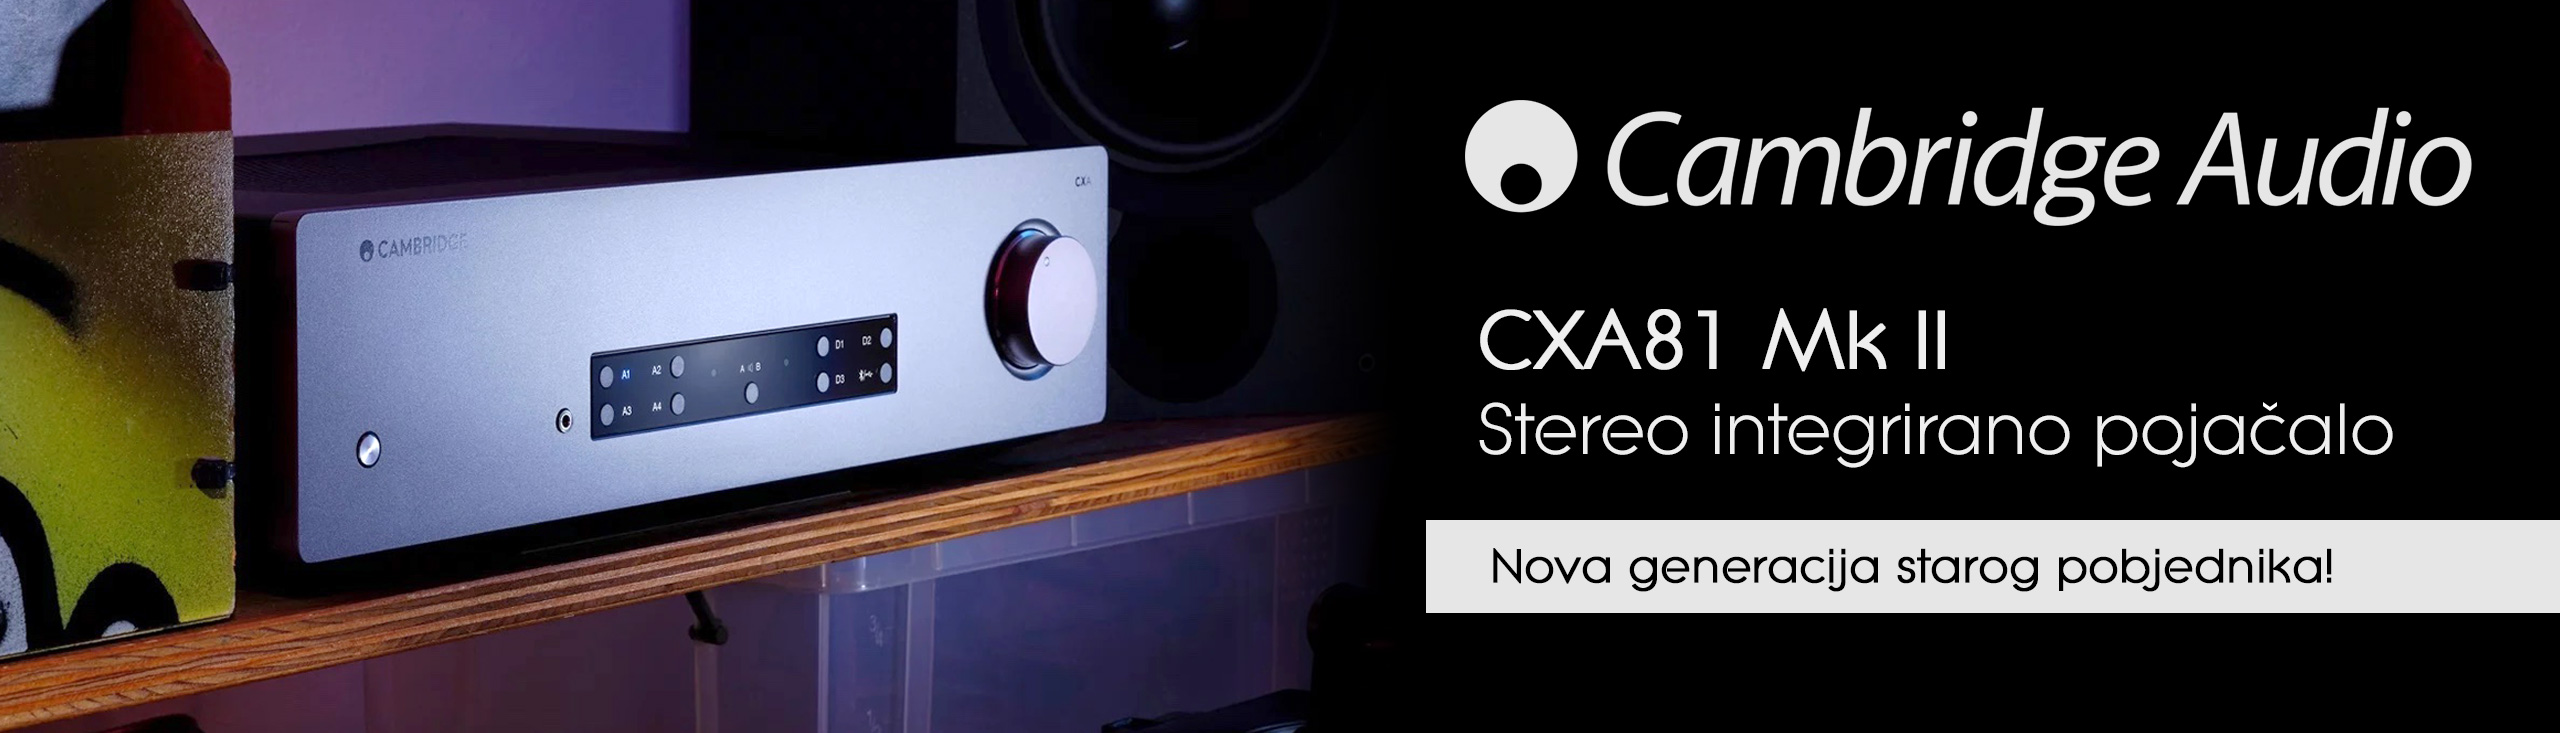 Cambridge Audio CXA81 Mk II - Stereo integrirano pojačalo